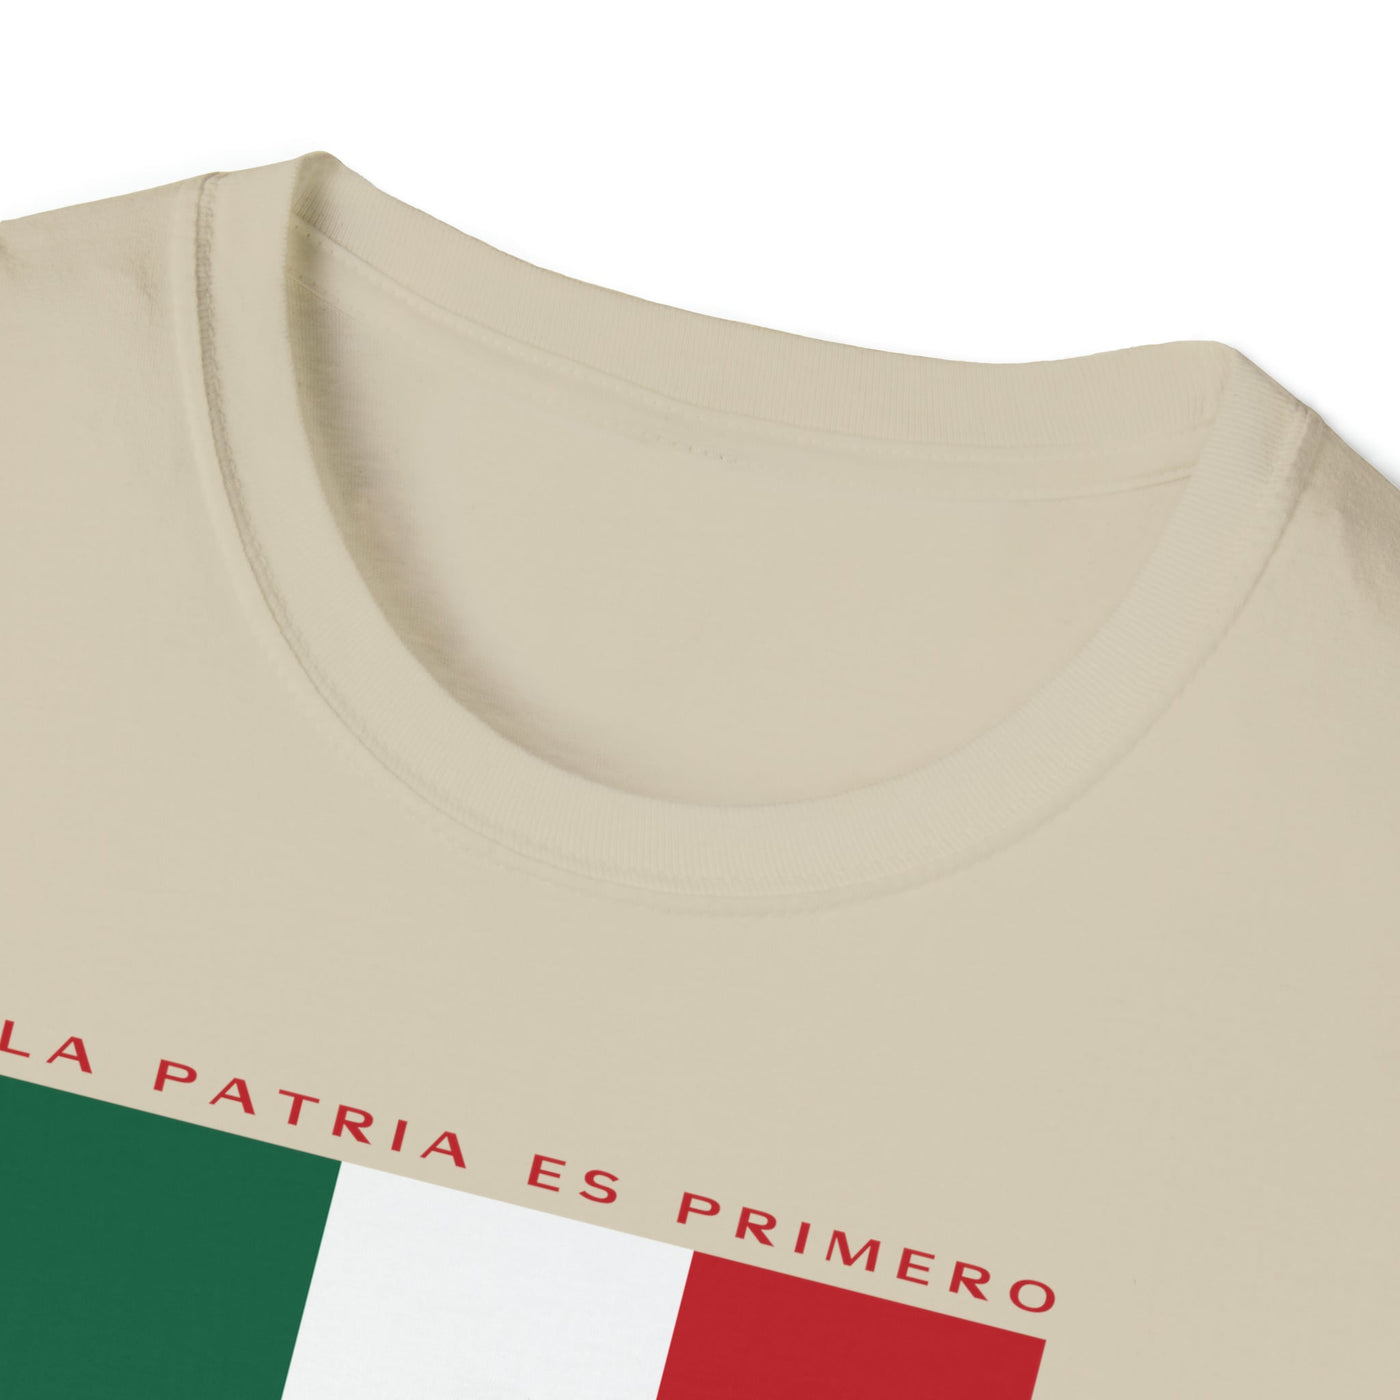 Mexico Retro T-Shirt - Ezra's Clothing